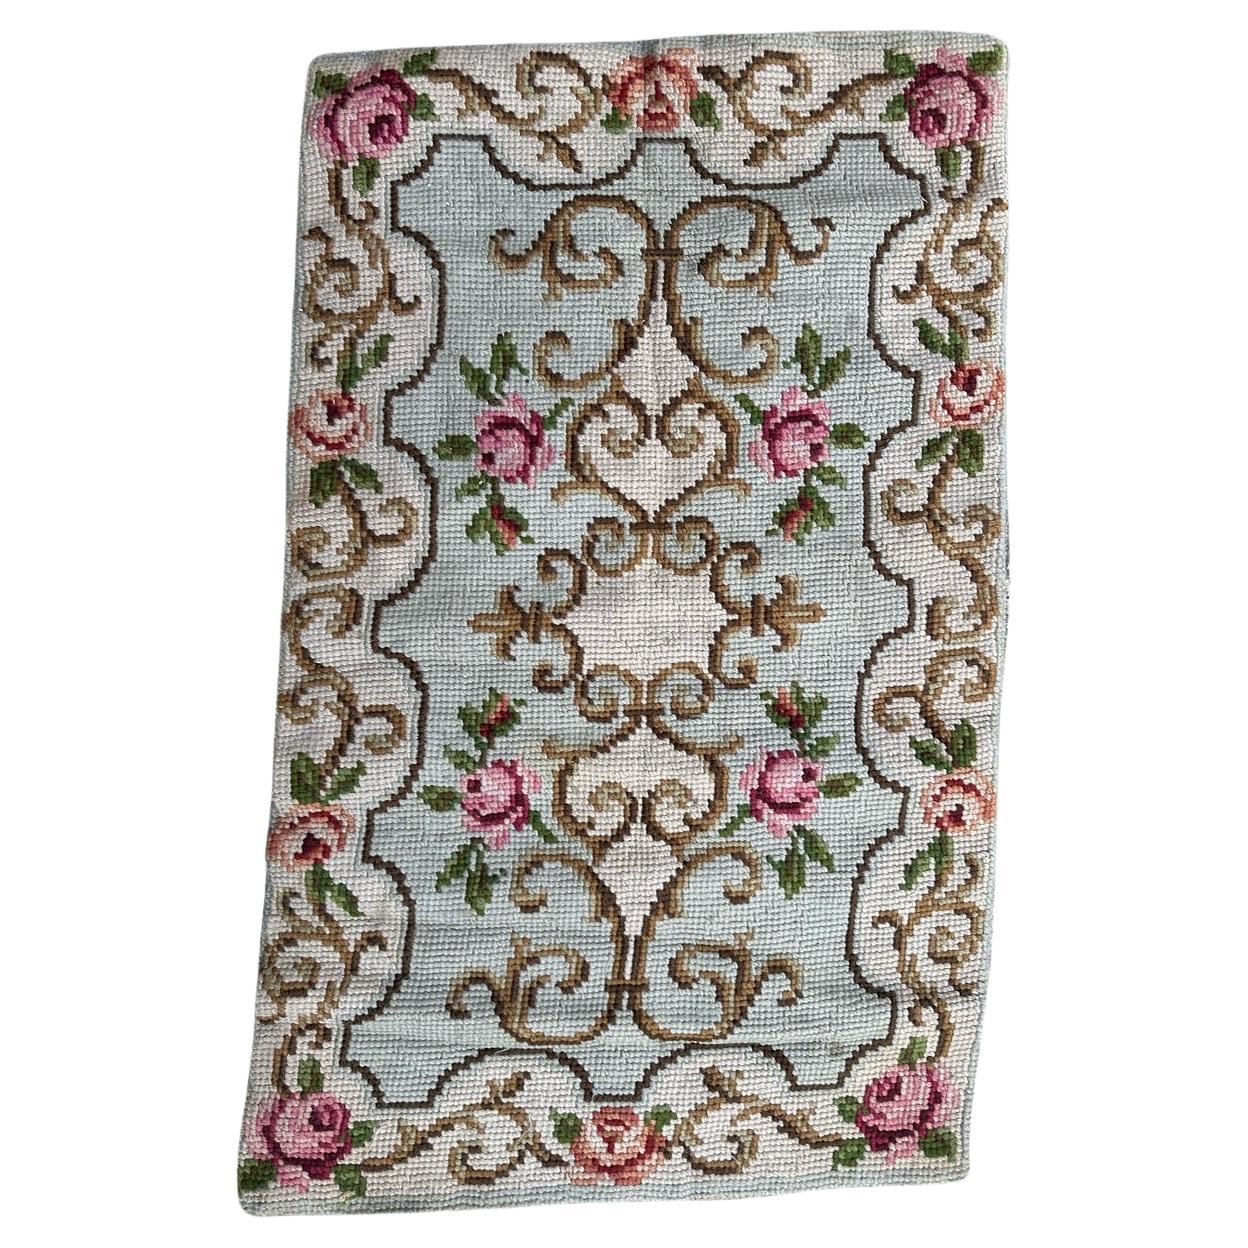 Bobyrug’s nice vintage French needlepoint rug 